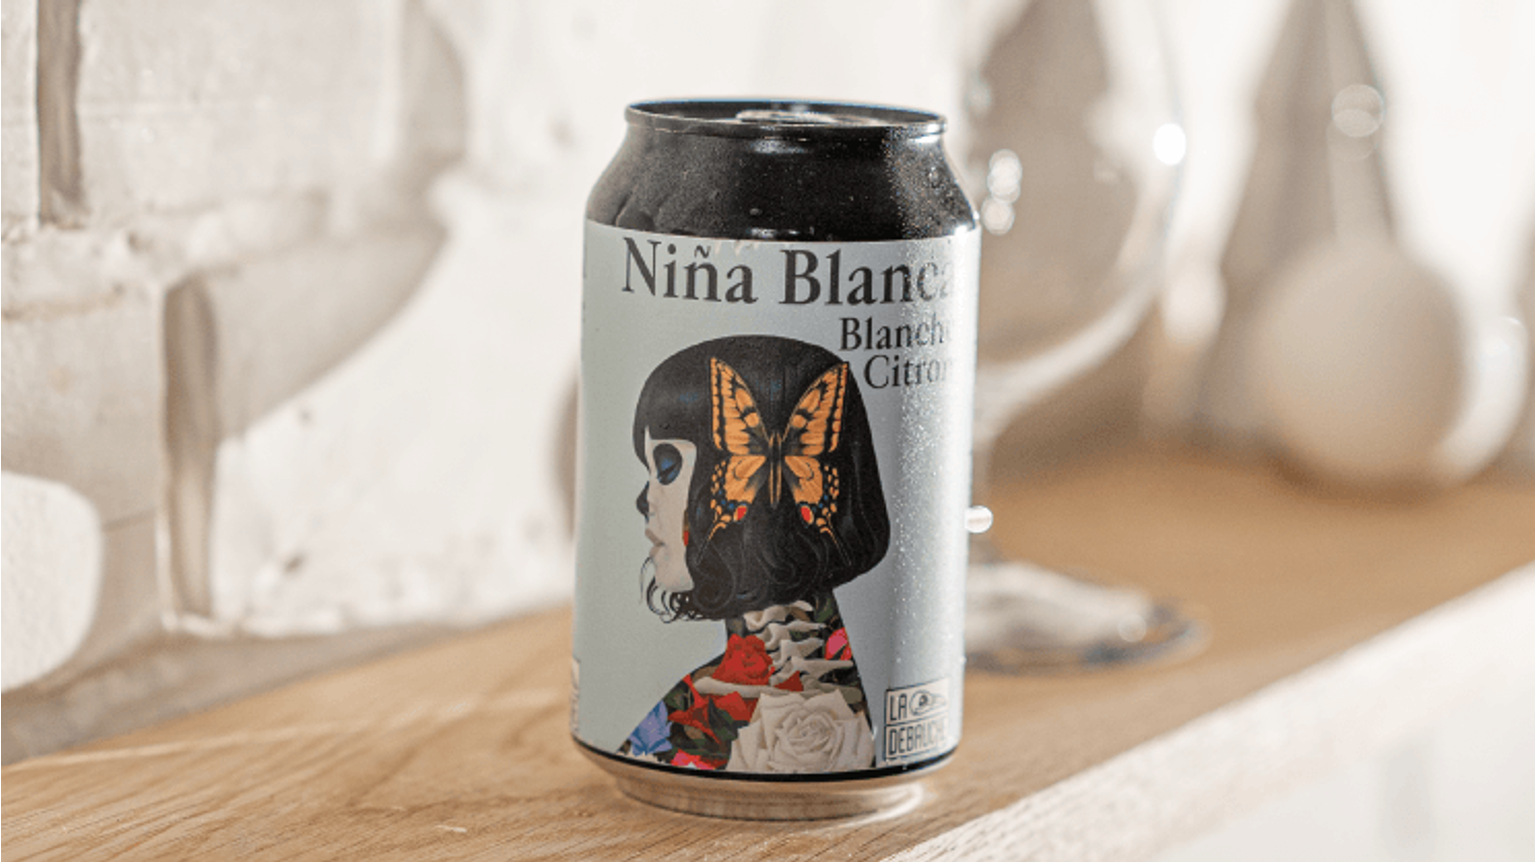 thumbnail for blog article named: Beery Christmas : La Débauche Nina Blanca